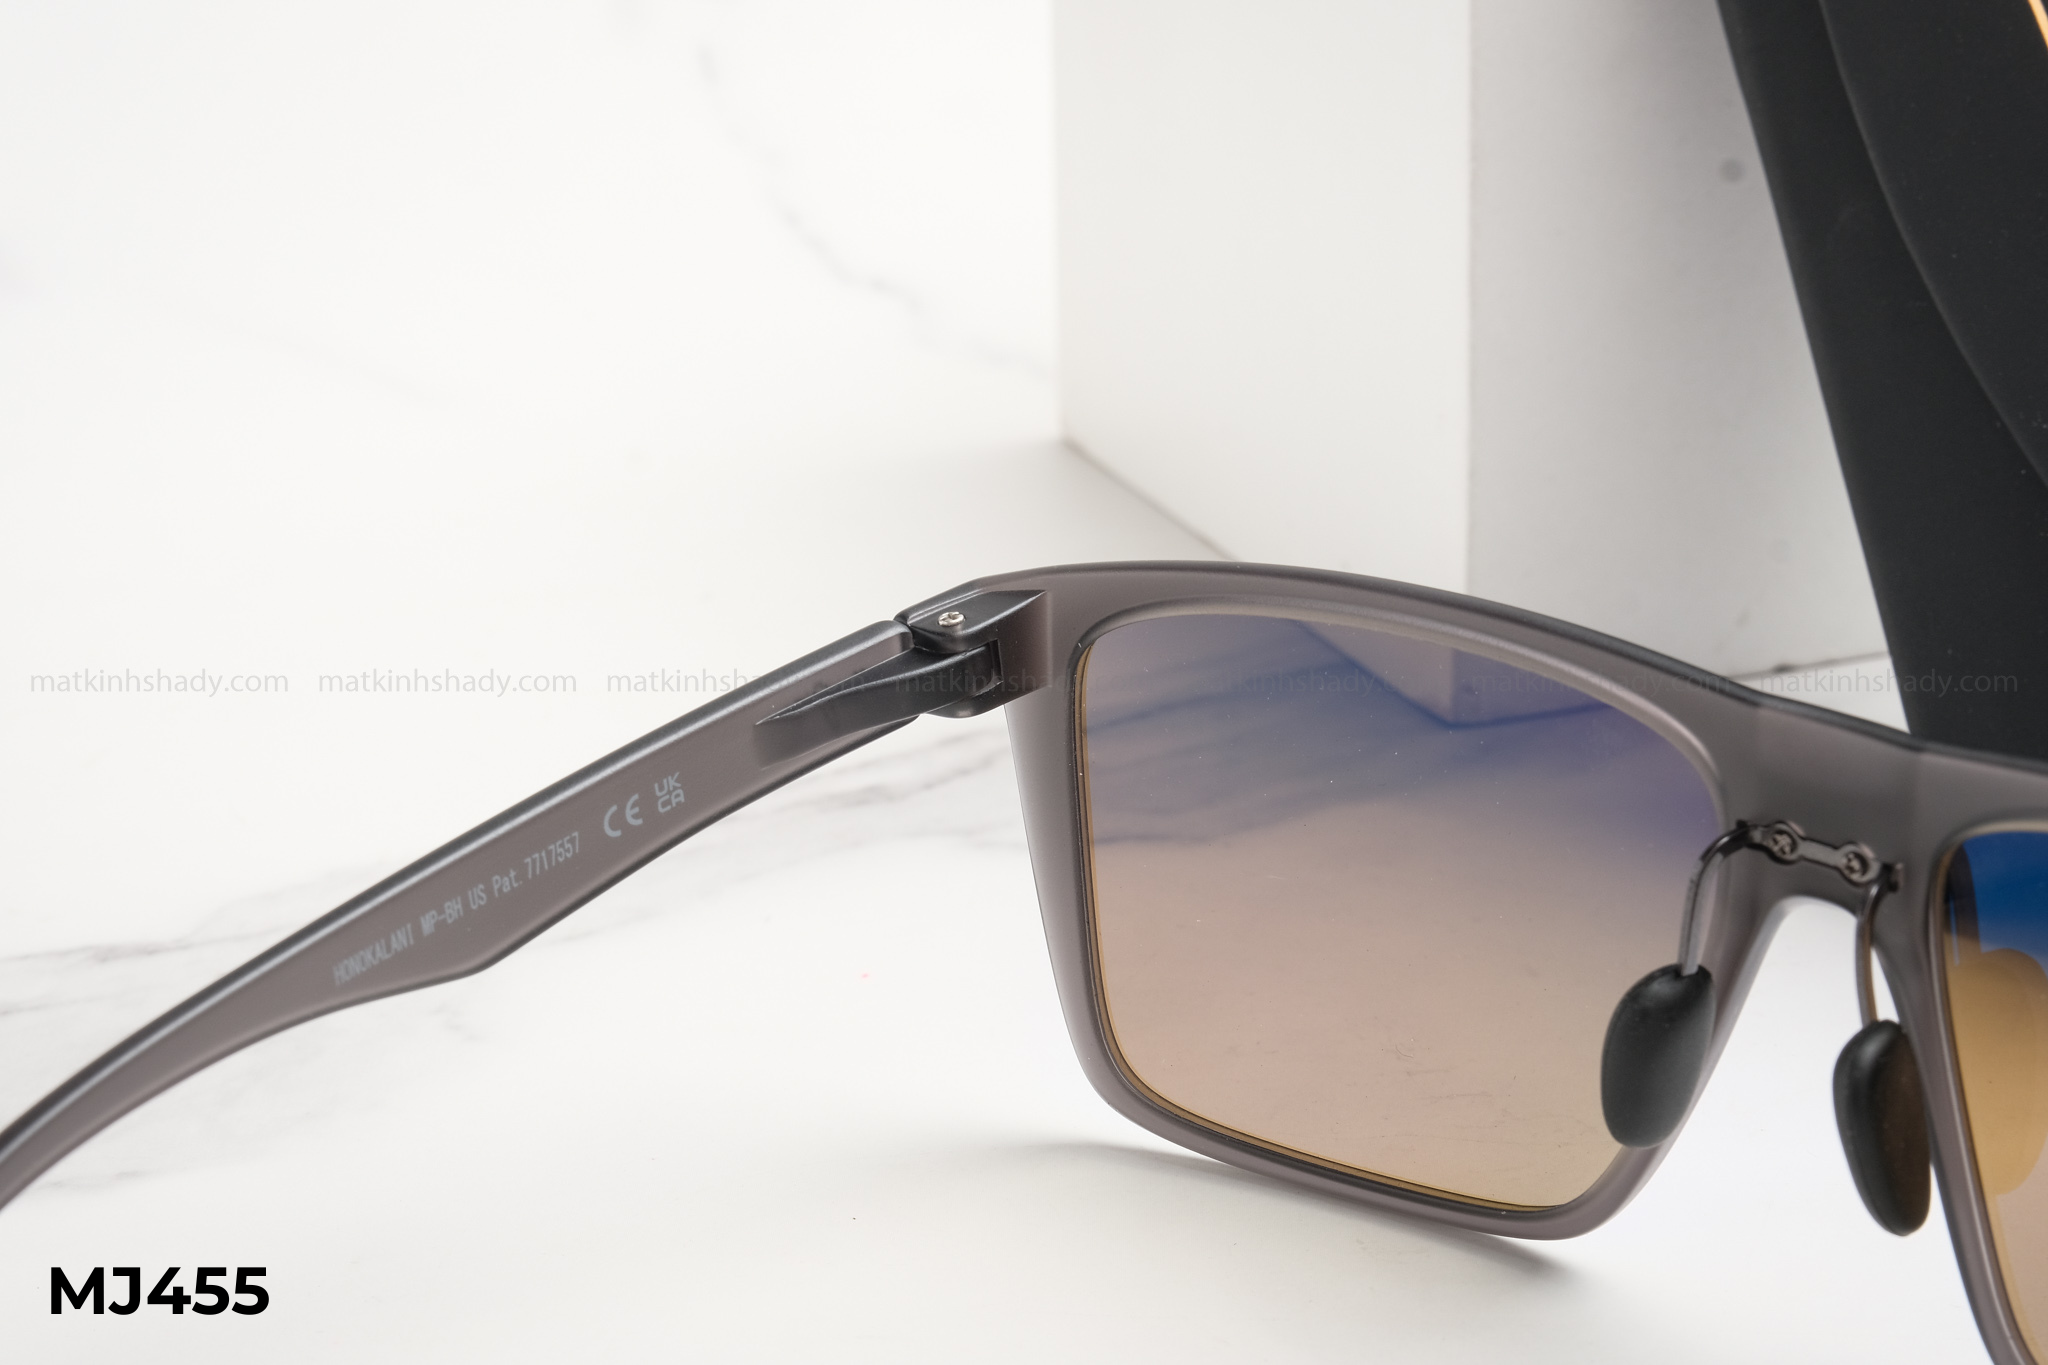  Maui Jim Eyewear - Sunglasses - MJ455 